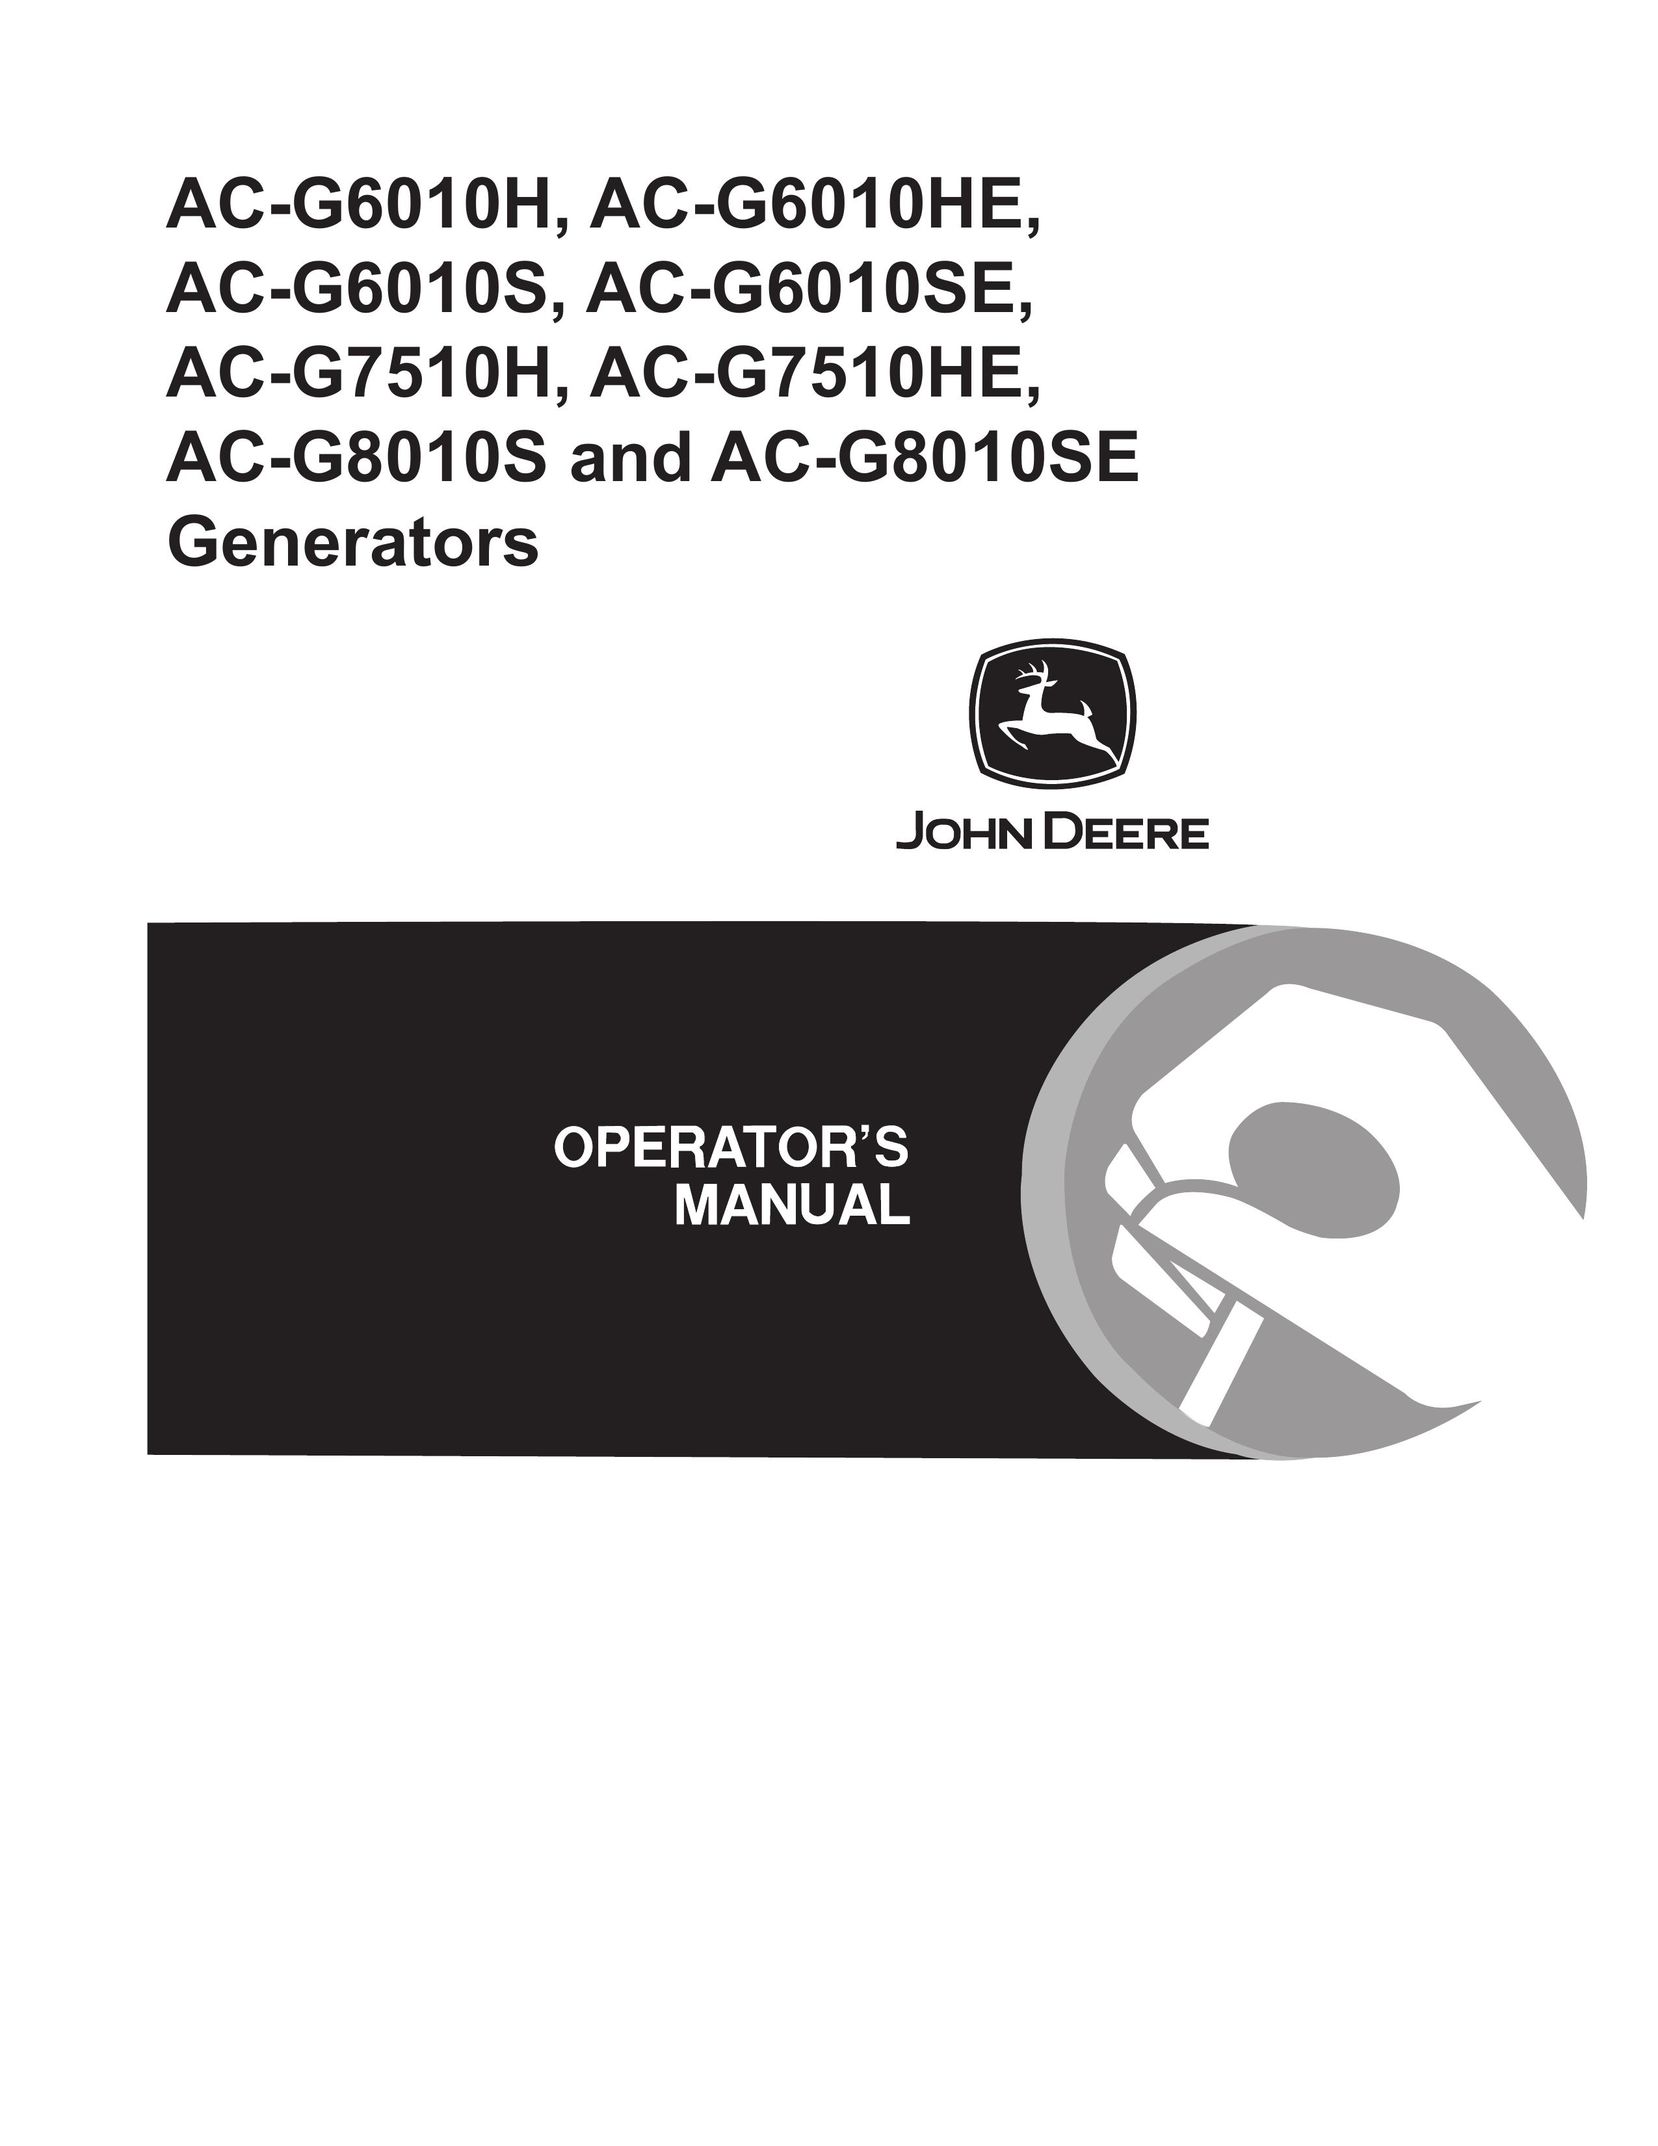 John Deere AC-G8010SE Welding System User Manual